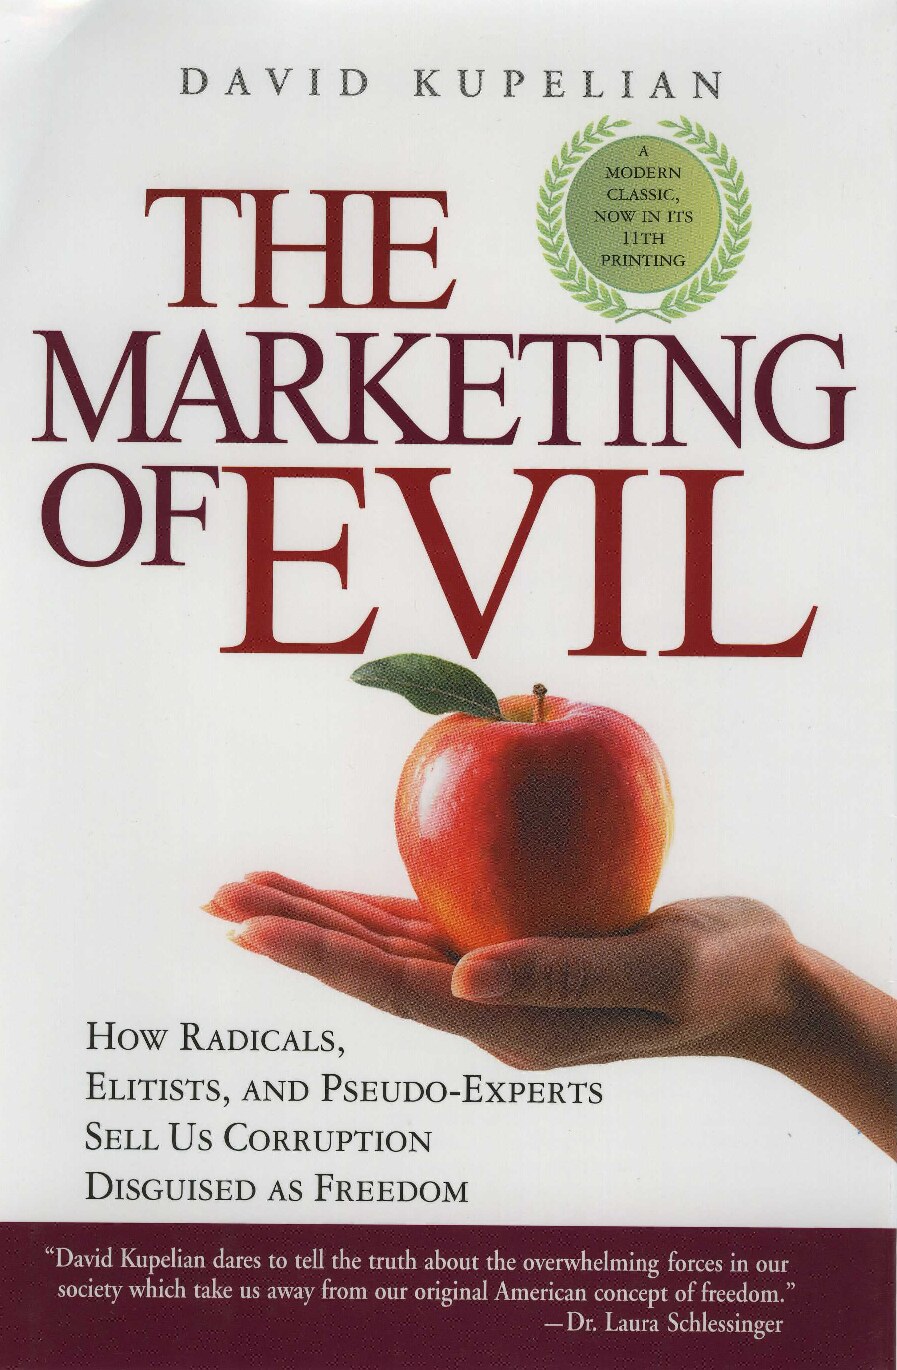 Kupelian, David; The Marketing of Evil